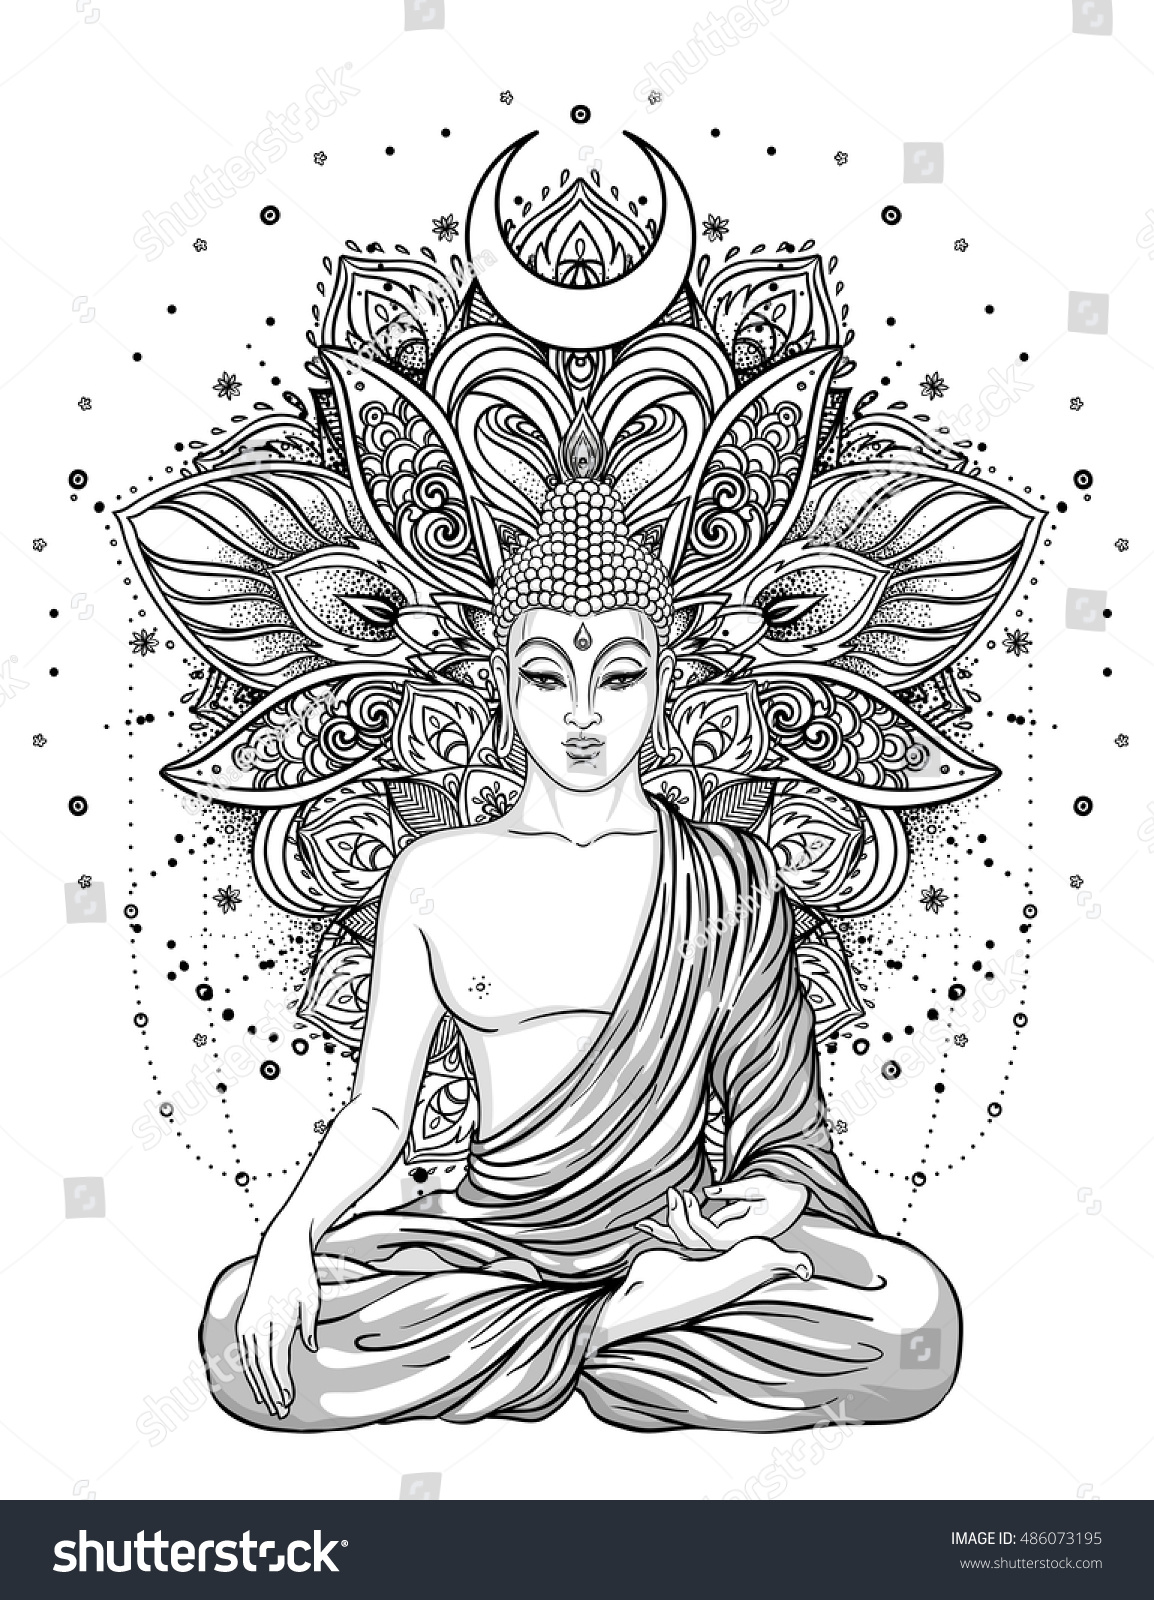 Download Sitting Buddha Statue Over Ornate Mandala Stock Vector ...